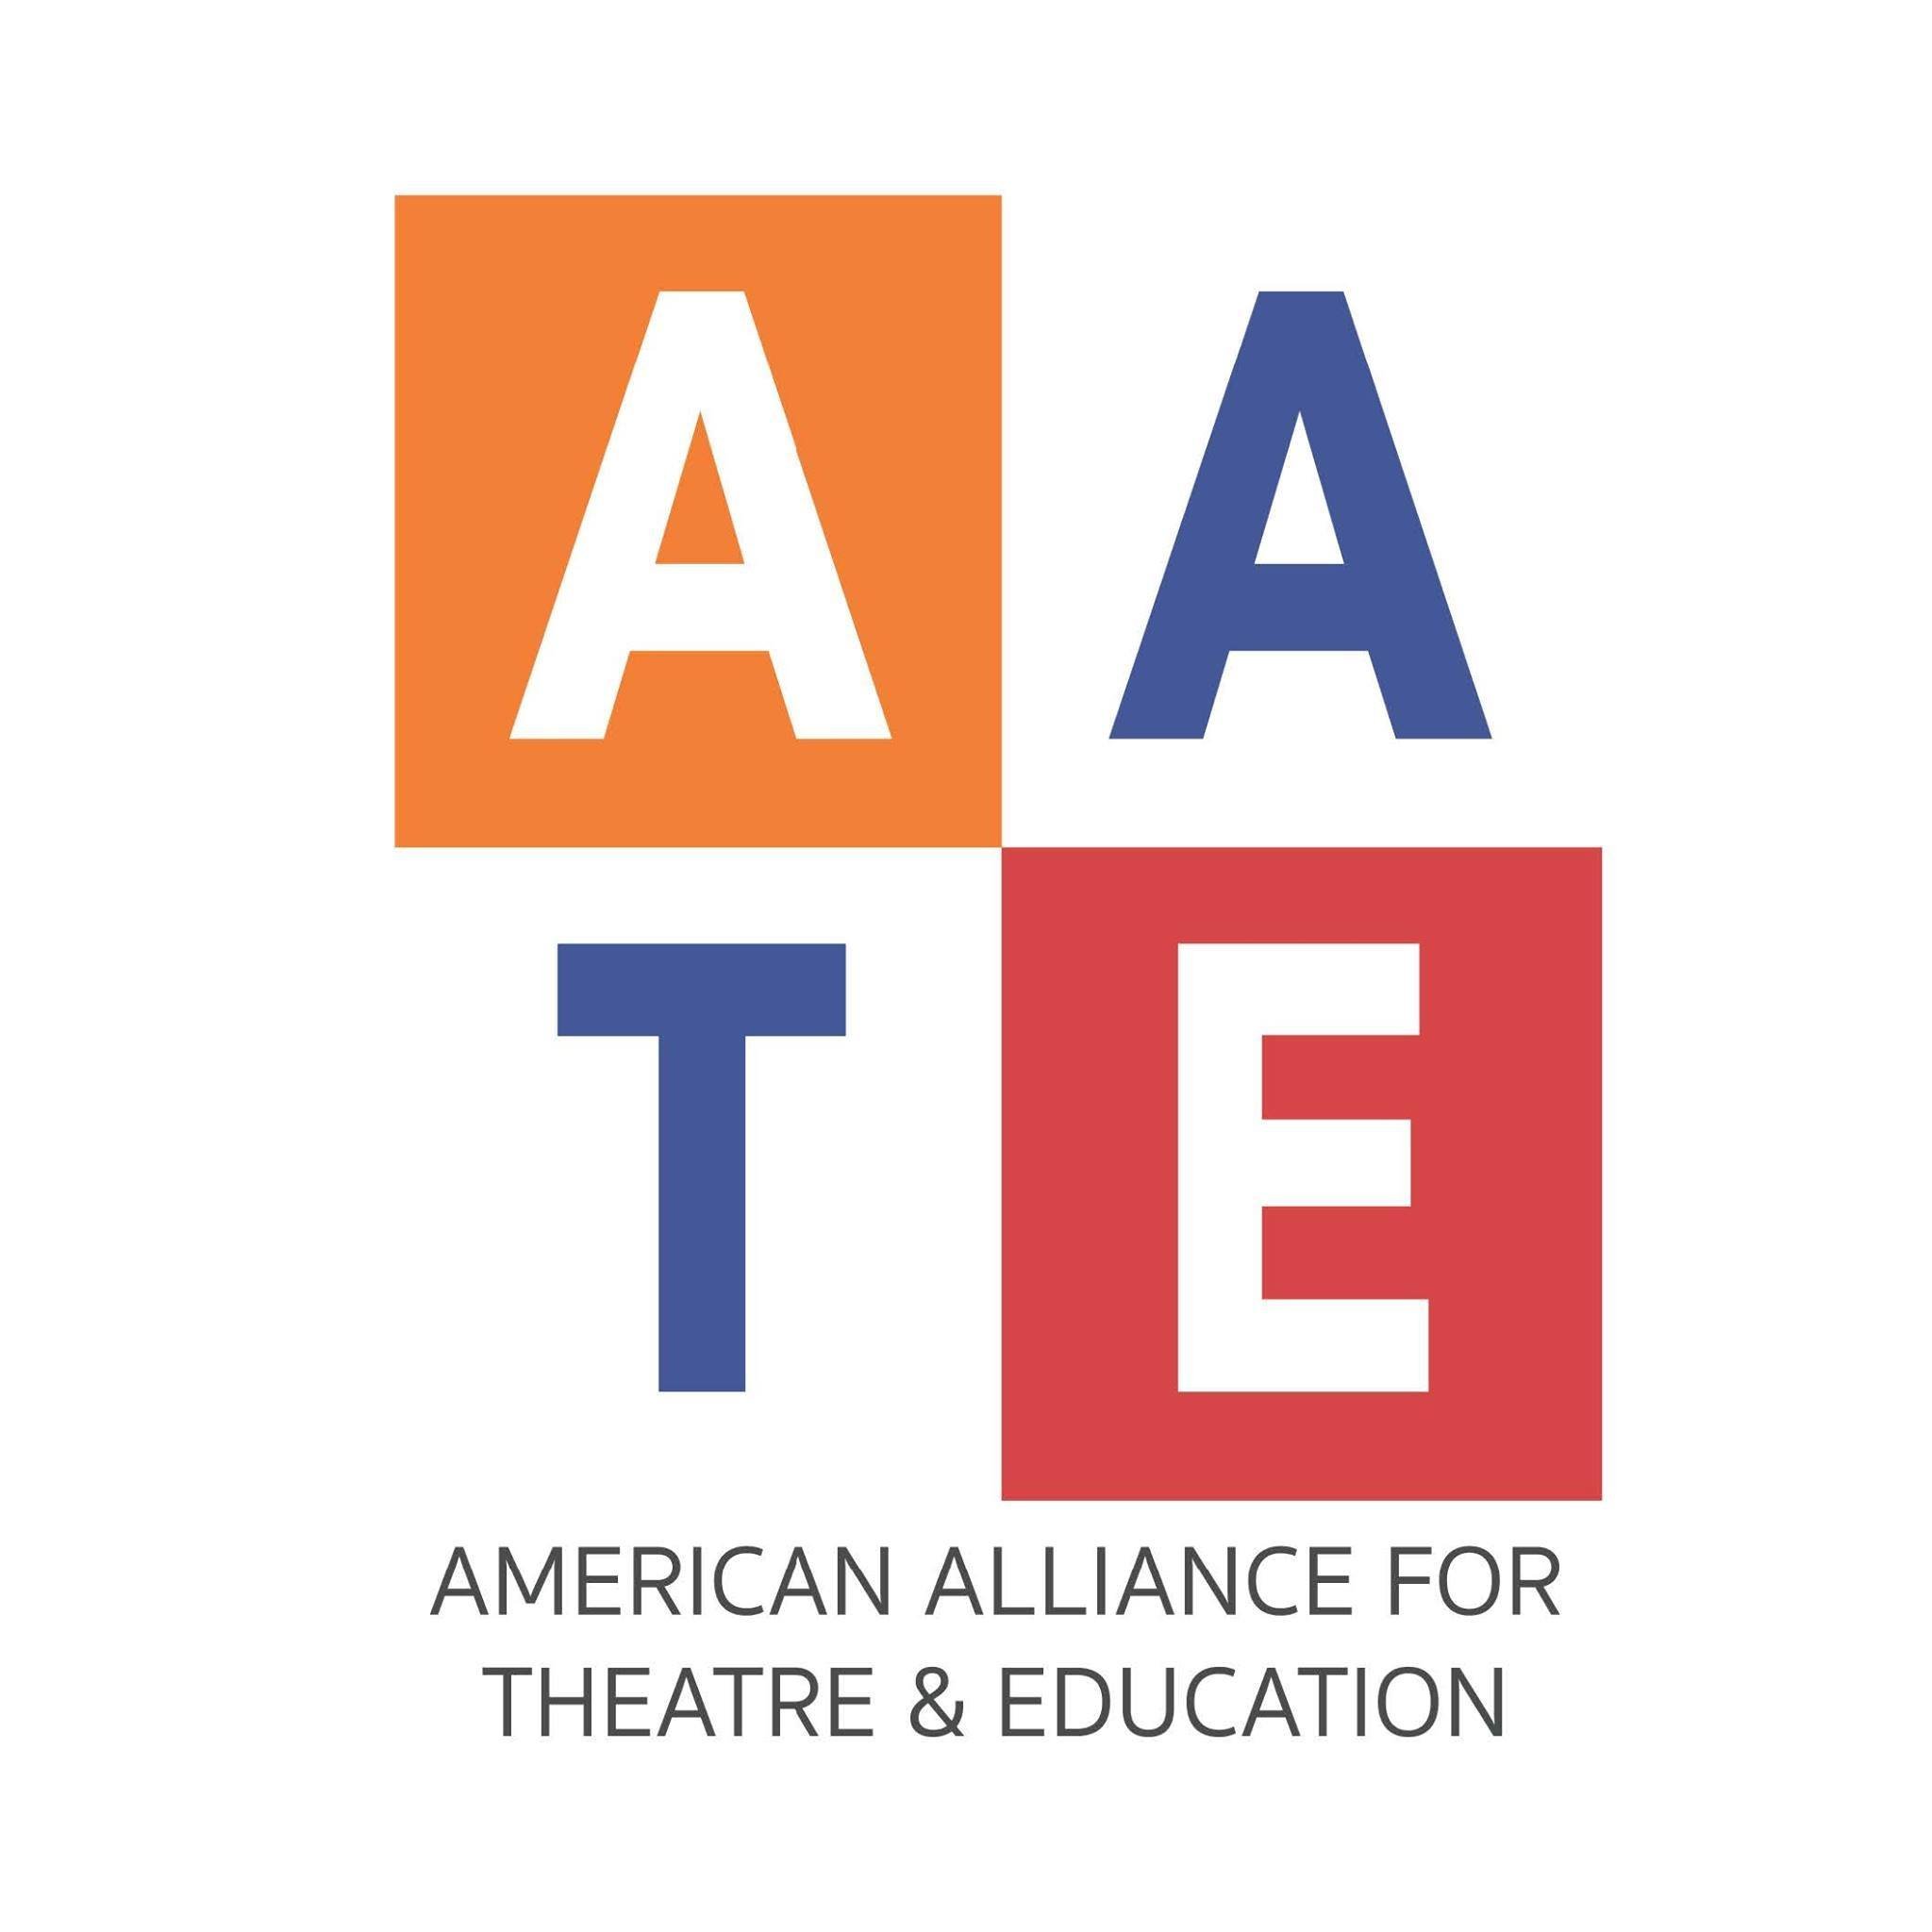 AATE Logo